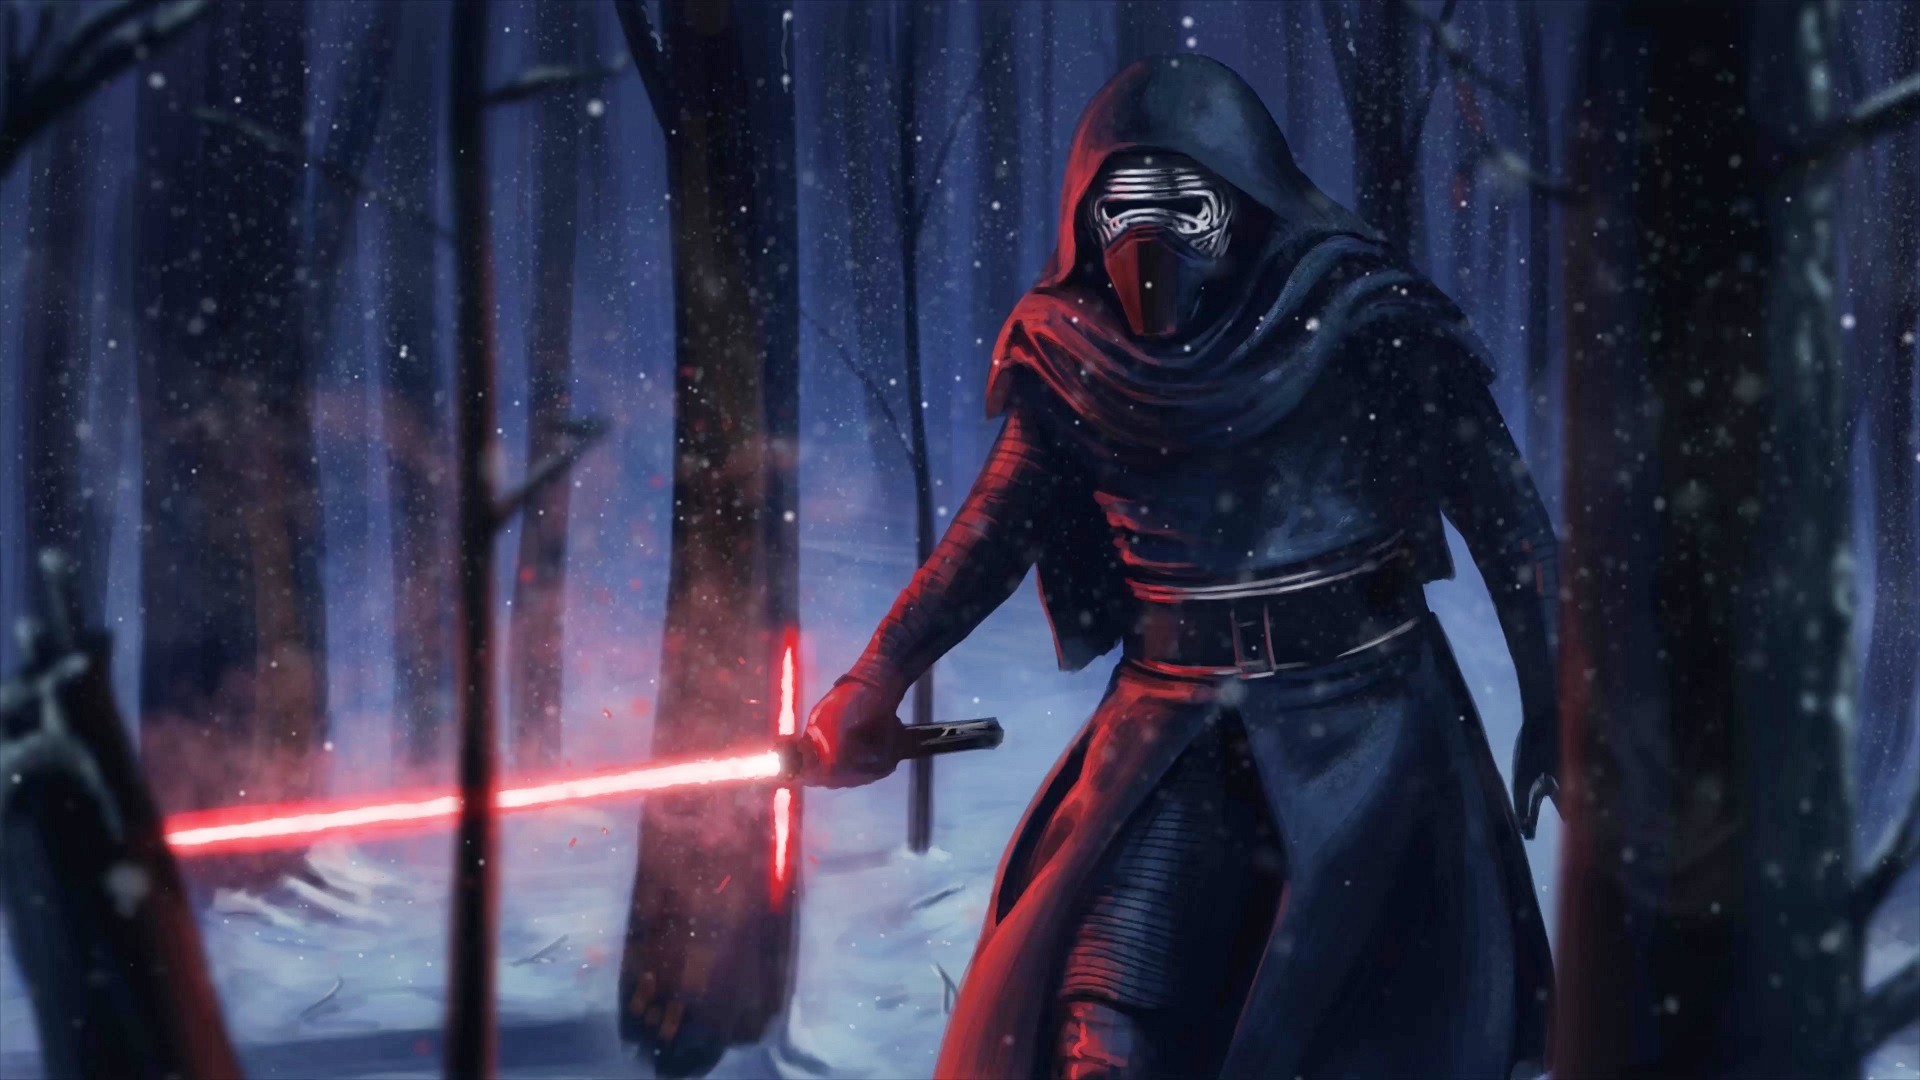 Kylo Ren empunha seu sabre de luz em Star Wars: O Despertar da Força.